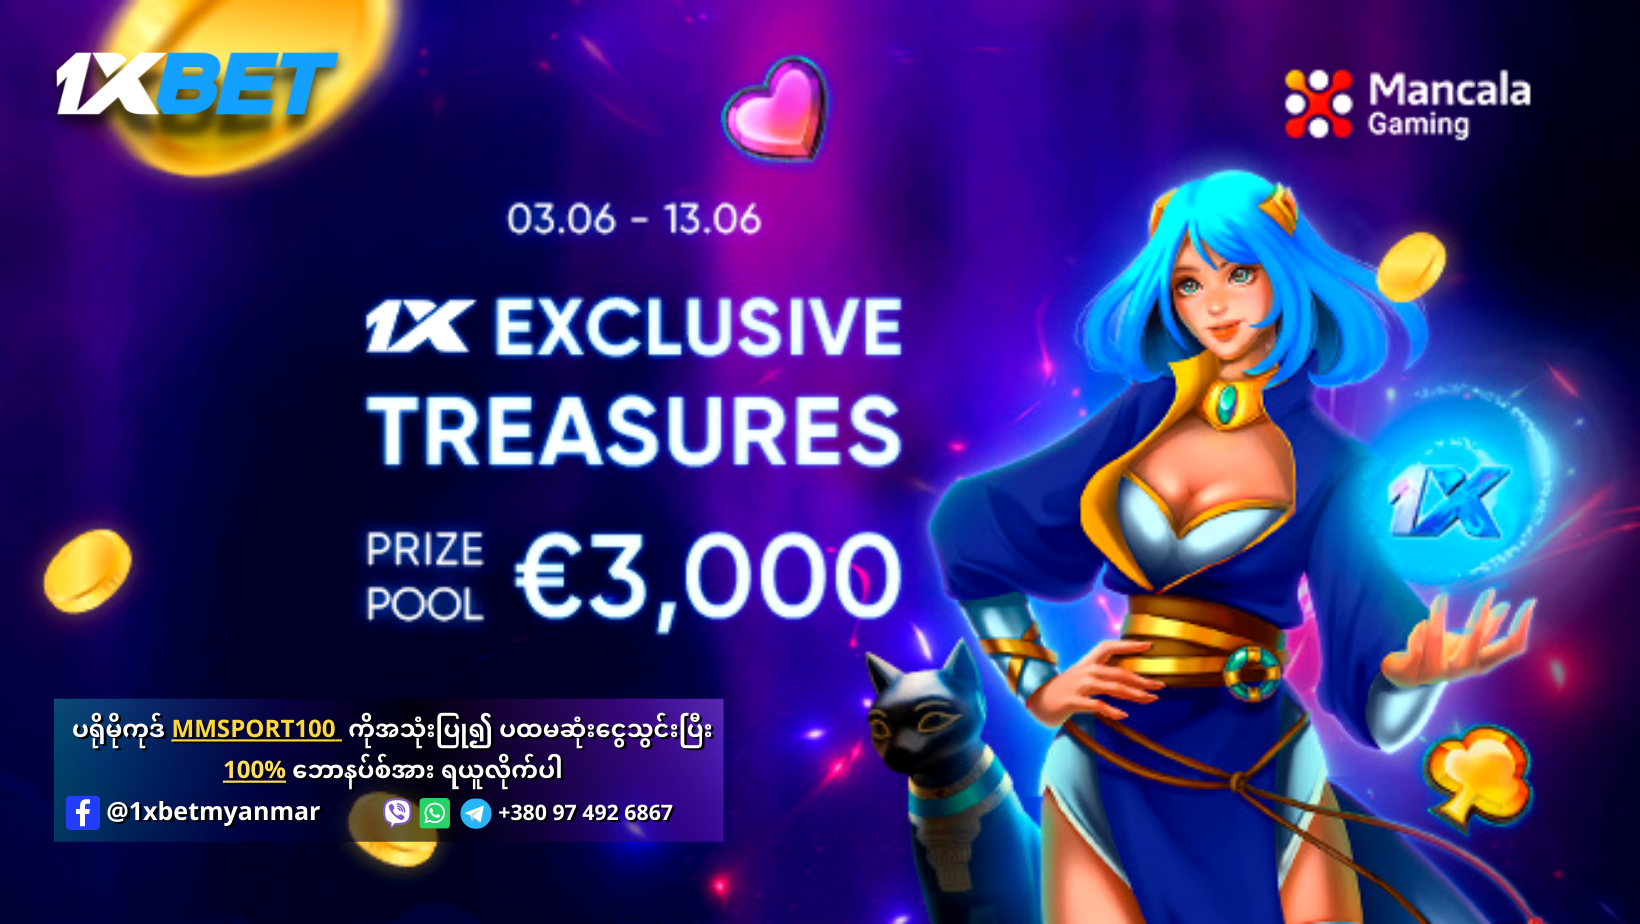 1x Exclusive Treasures Promotion